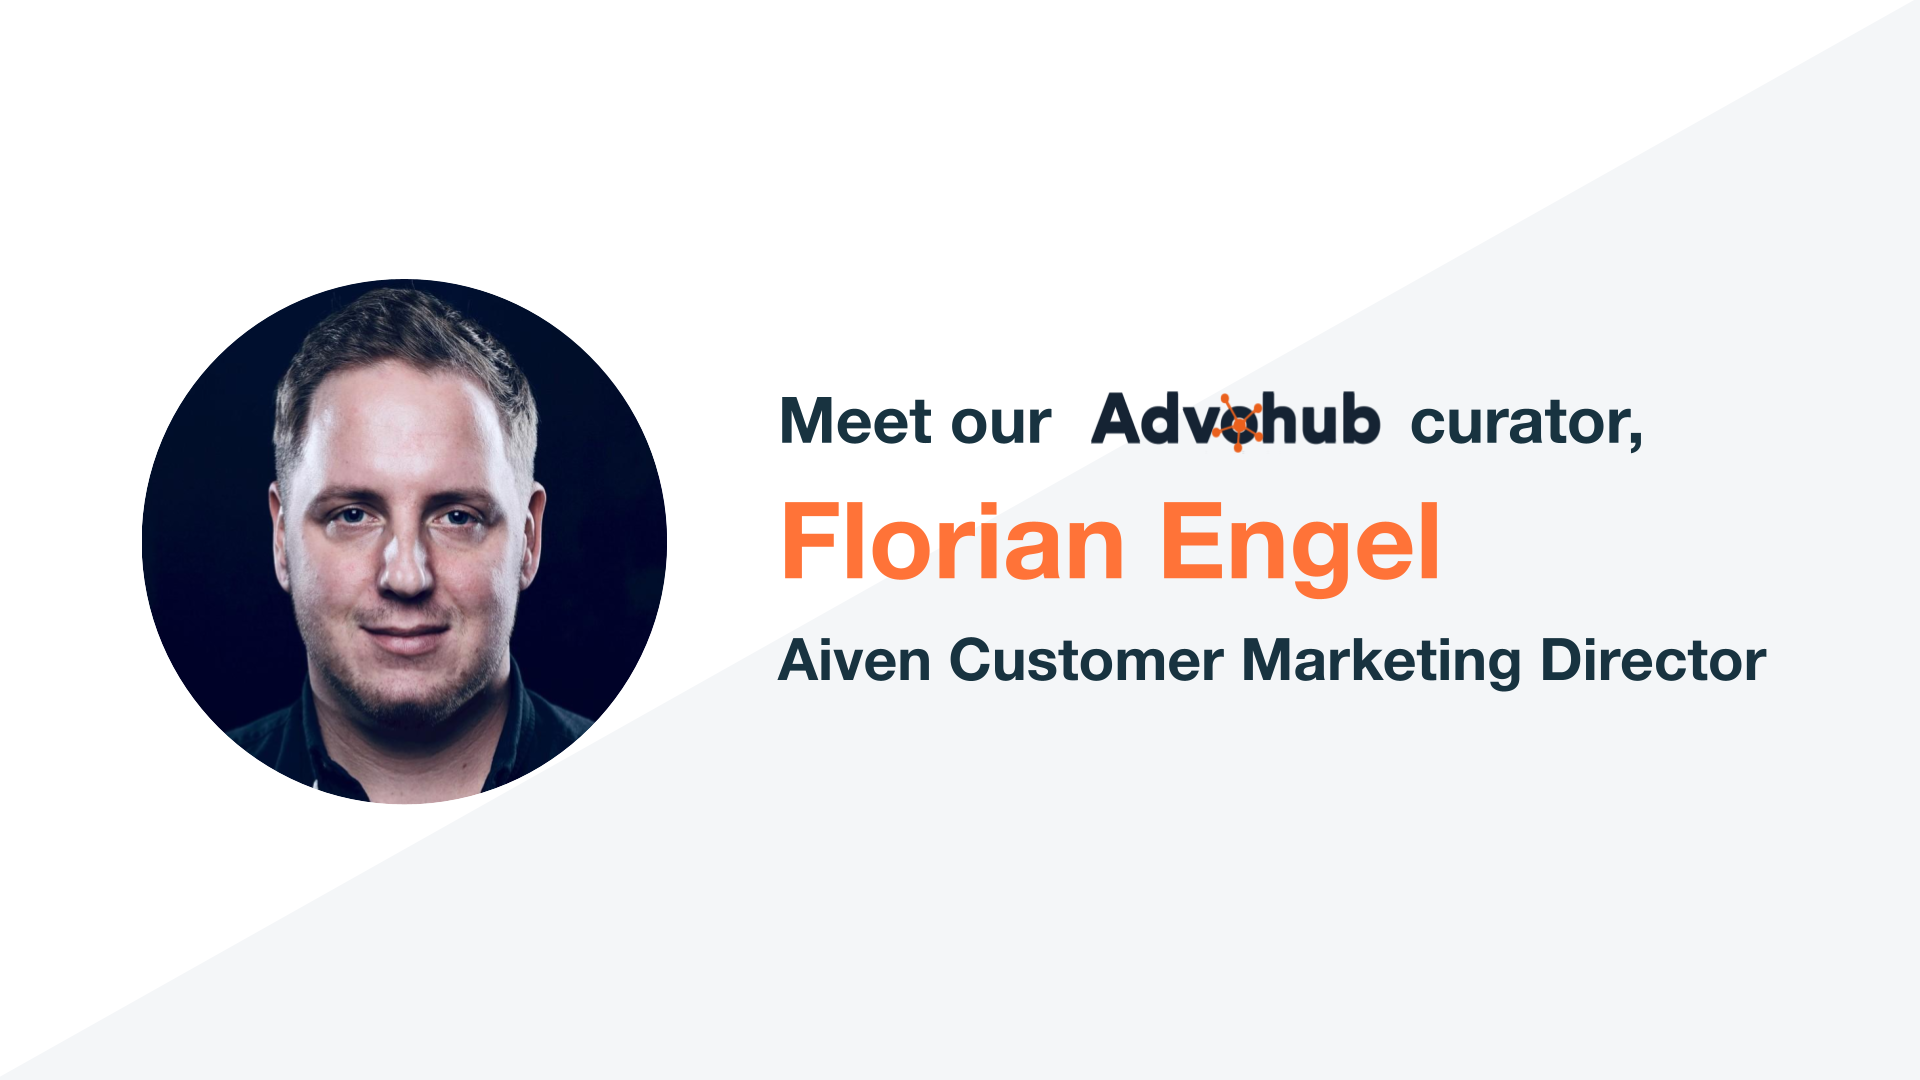 Portrait image of Advohub Curator, Florian Engel, Aiven Customer Marketing Director